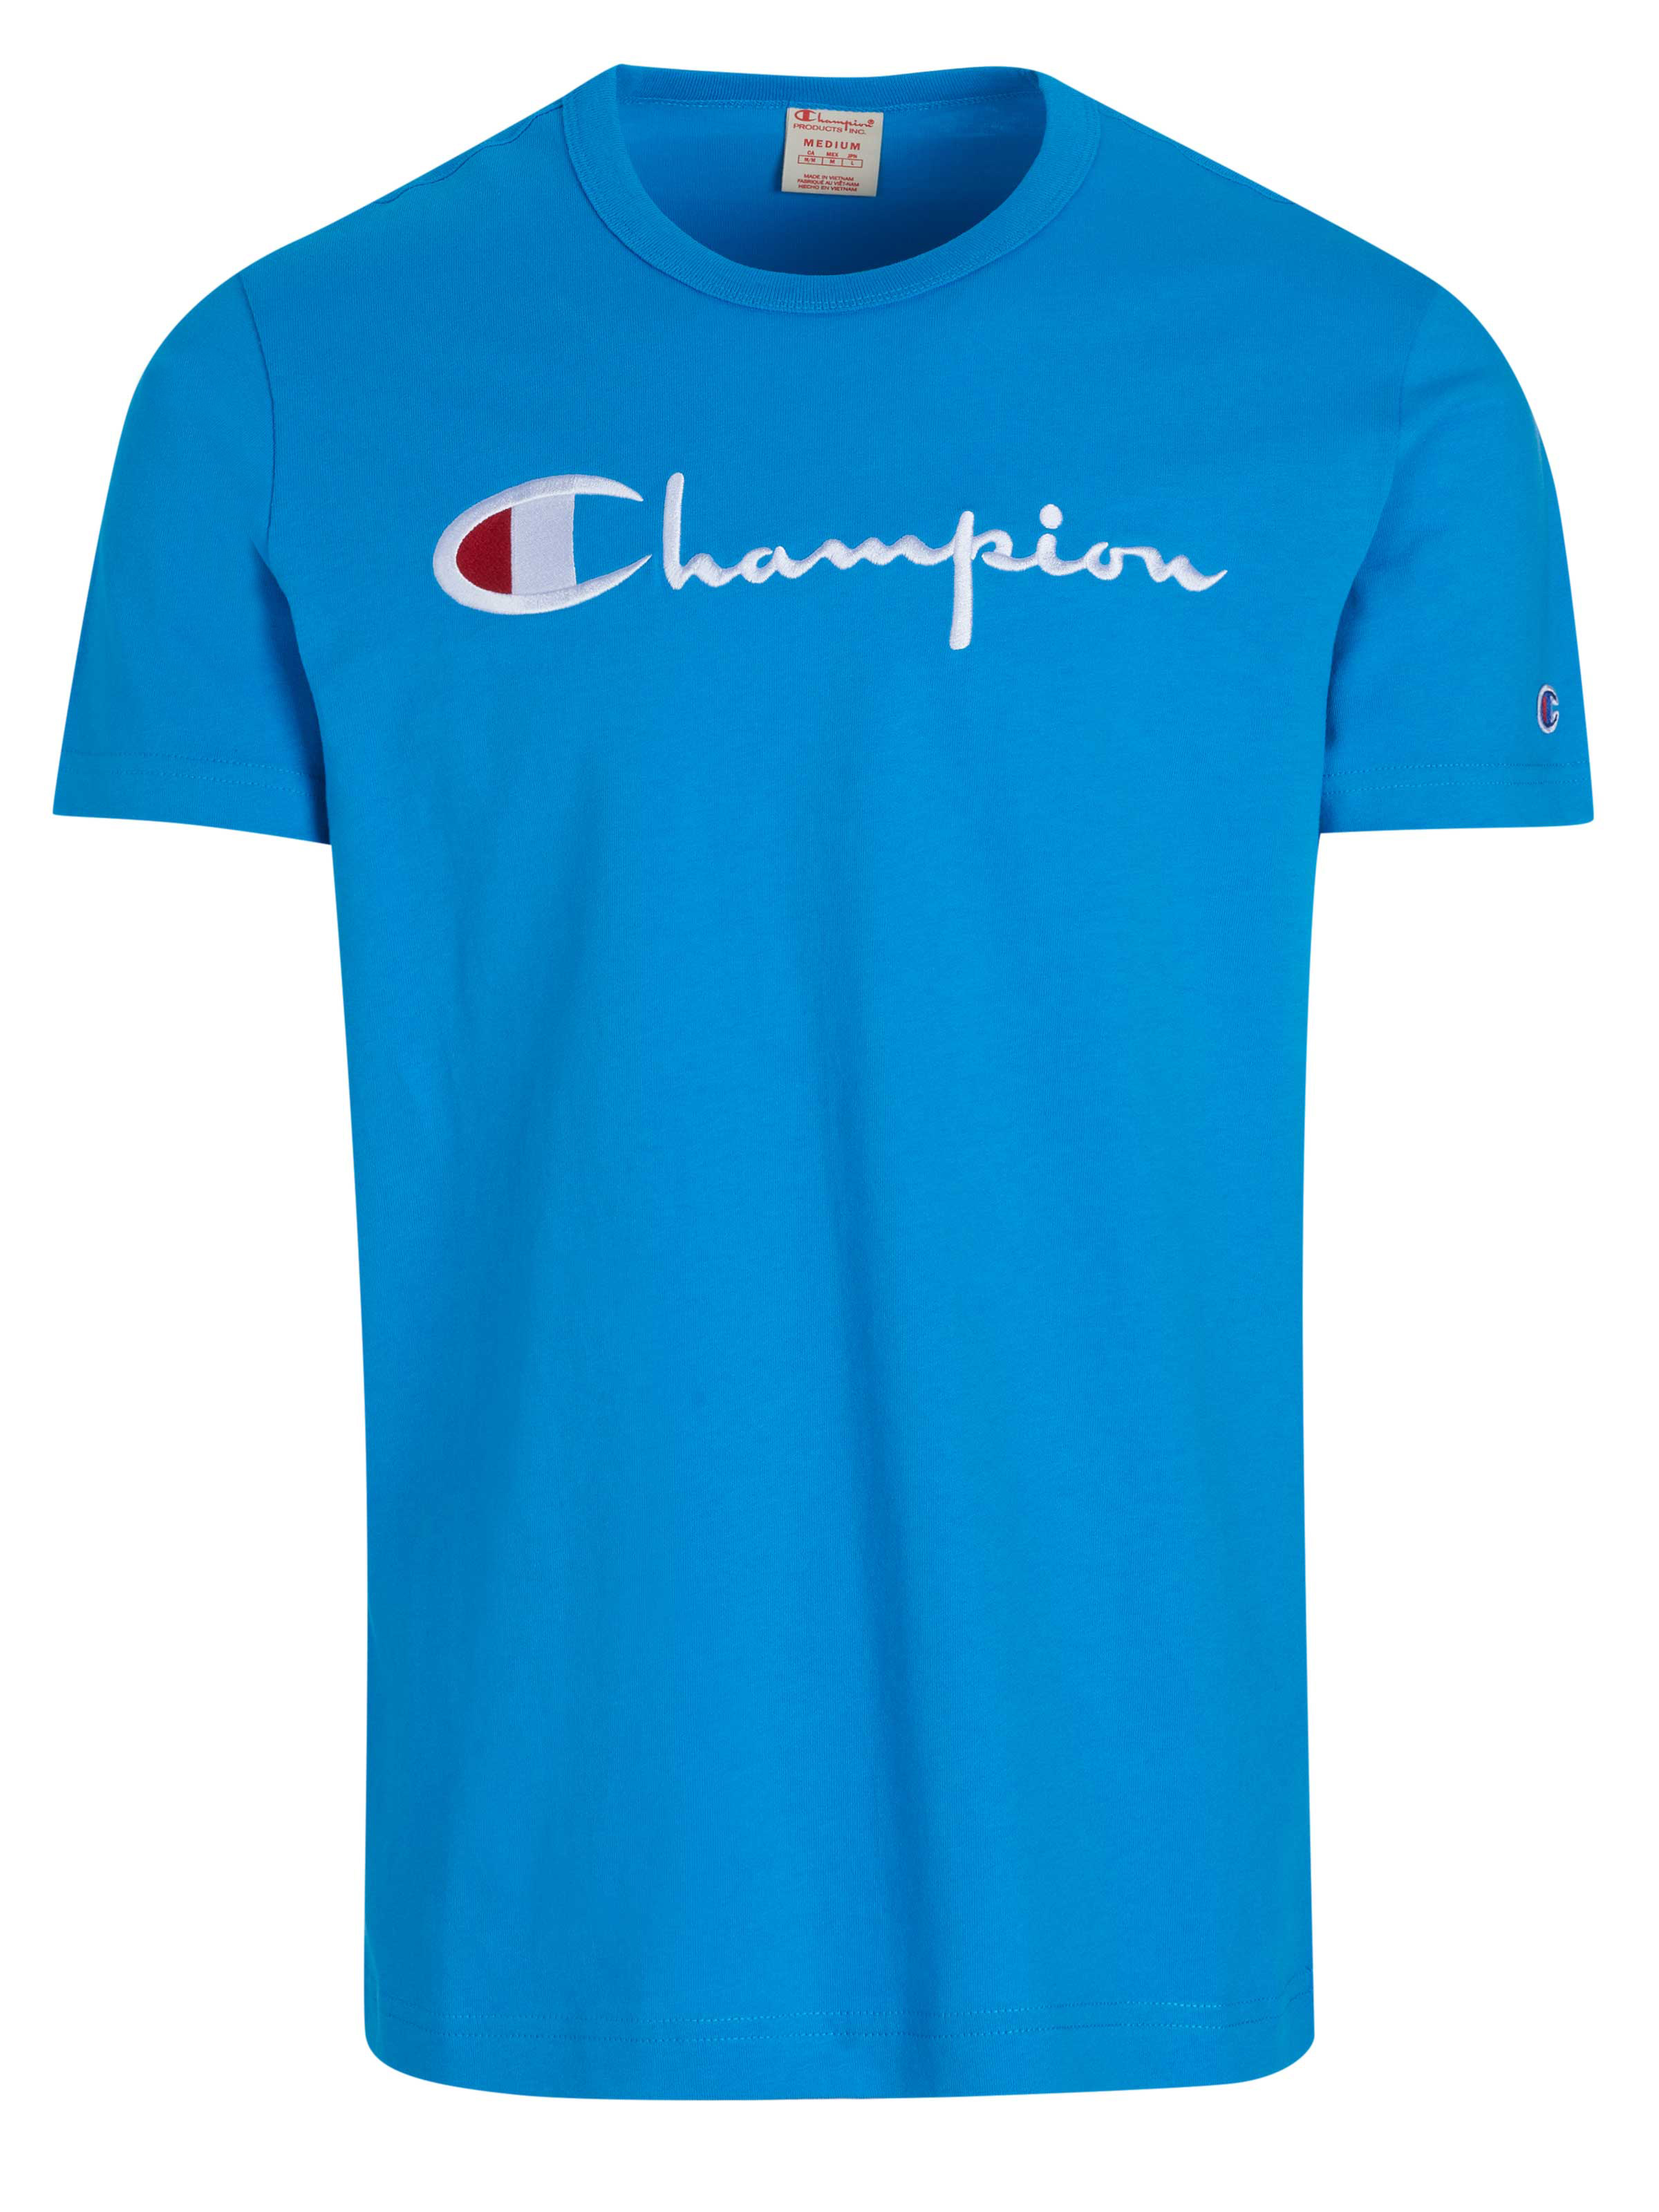 Fashionesta T-shirt Champion SALE on Blue |